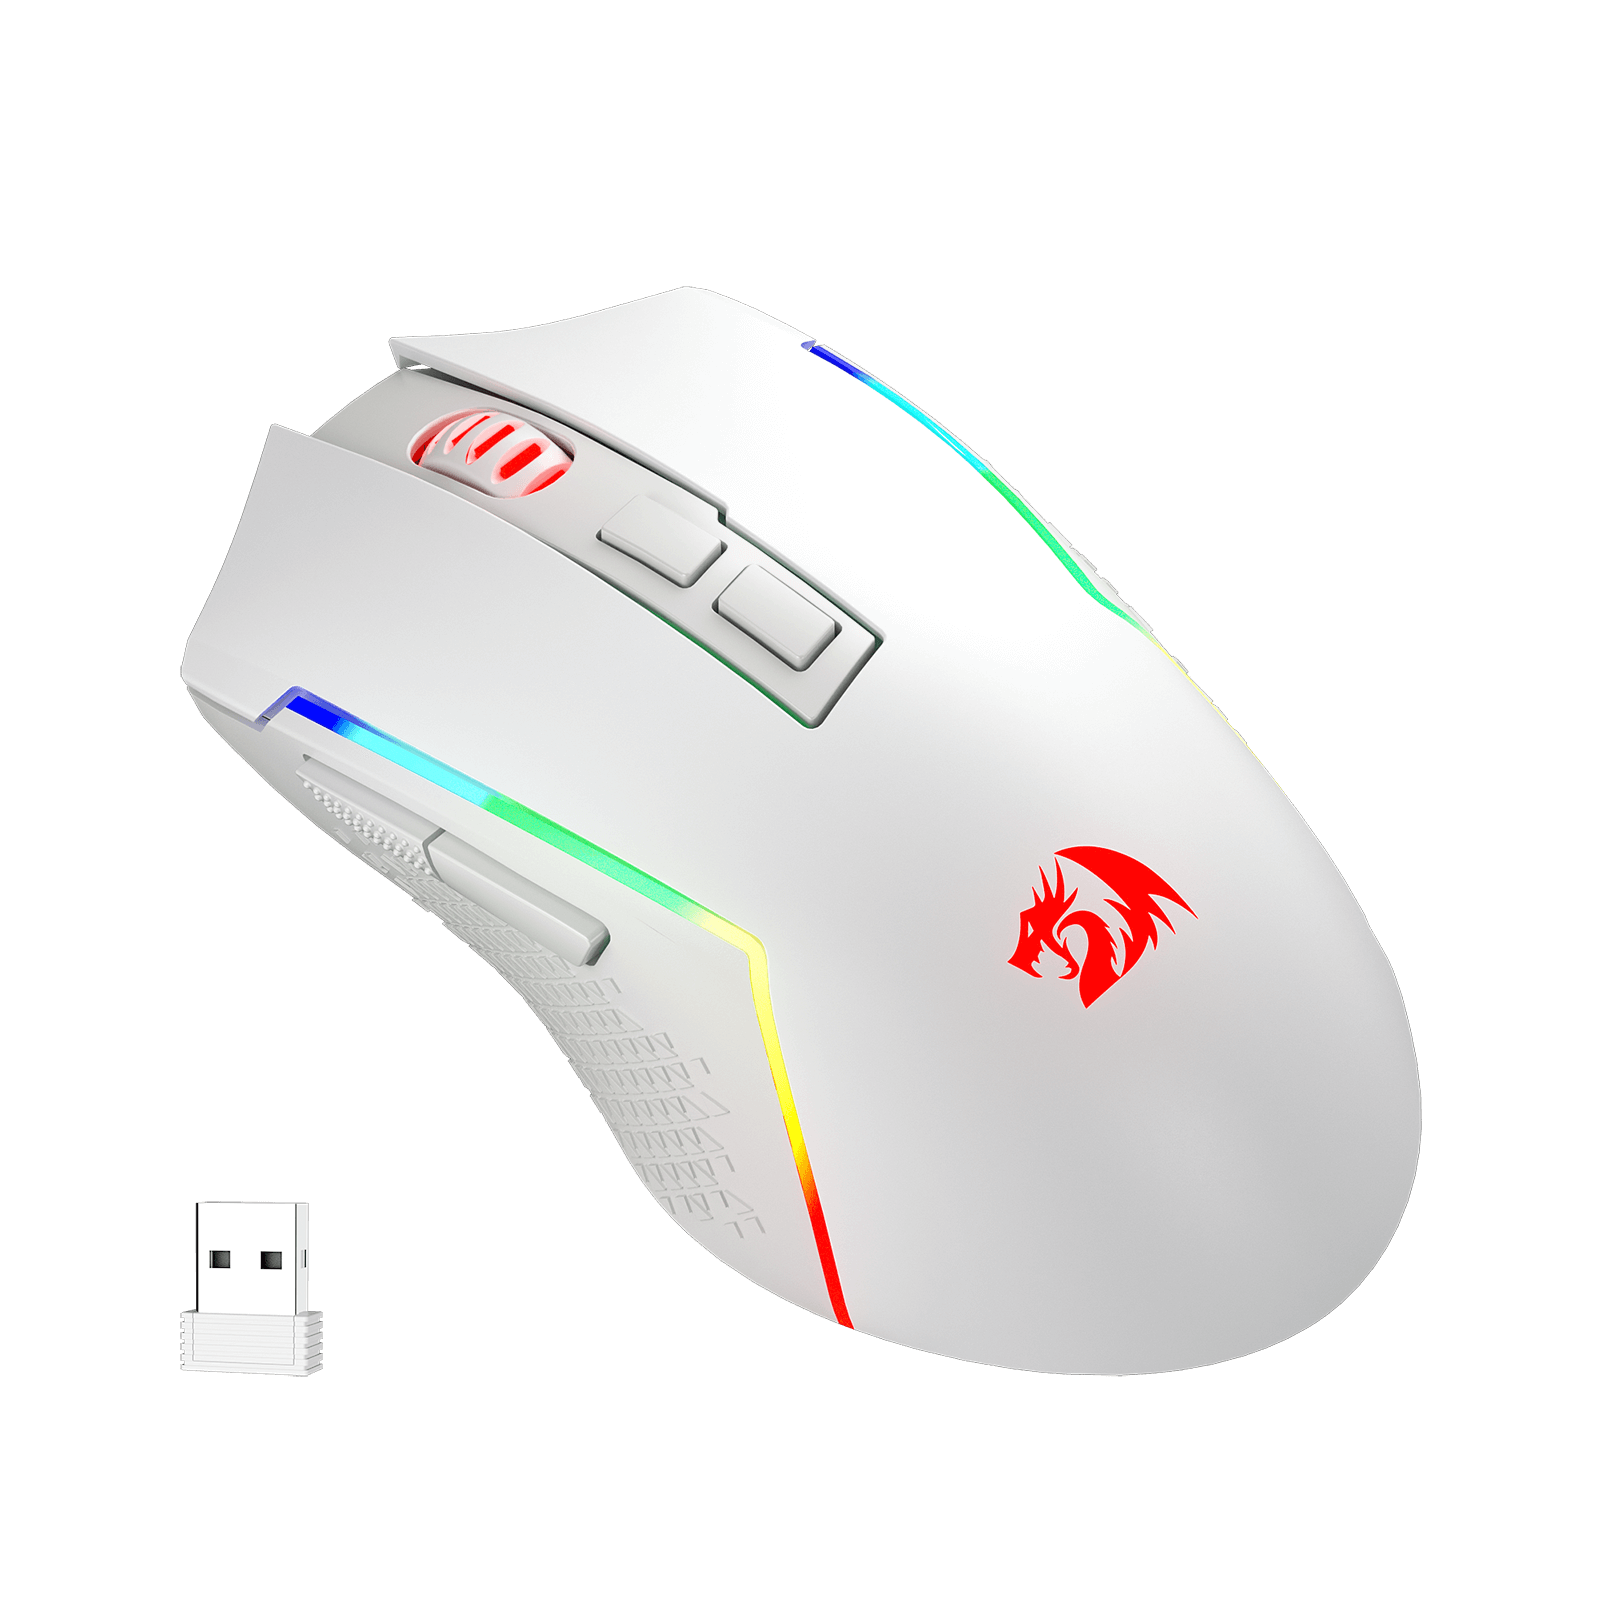 Redragon M693 Wireless Bluetooth Gaming Mouse, 8000 DPI Wired/Wireless –  REDRAGON ZONE